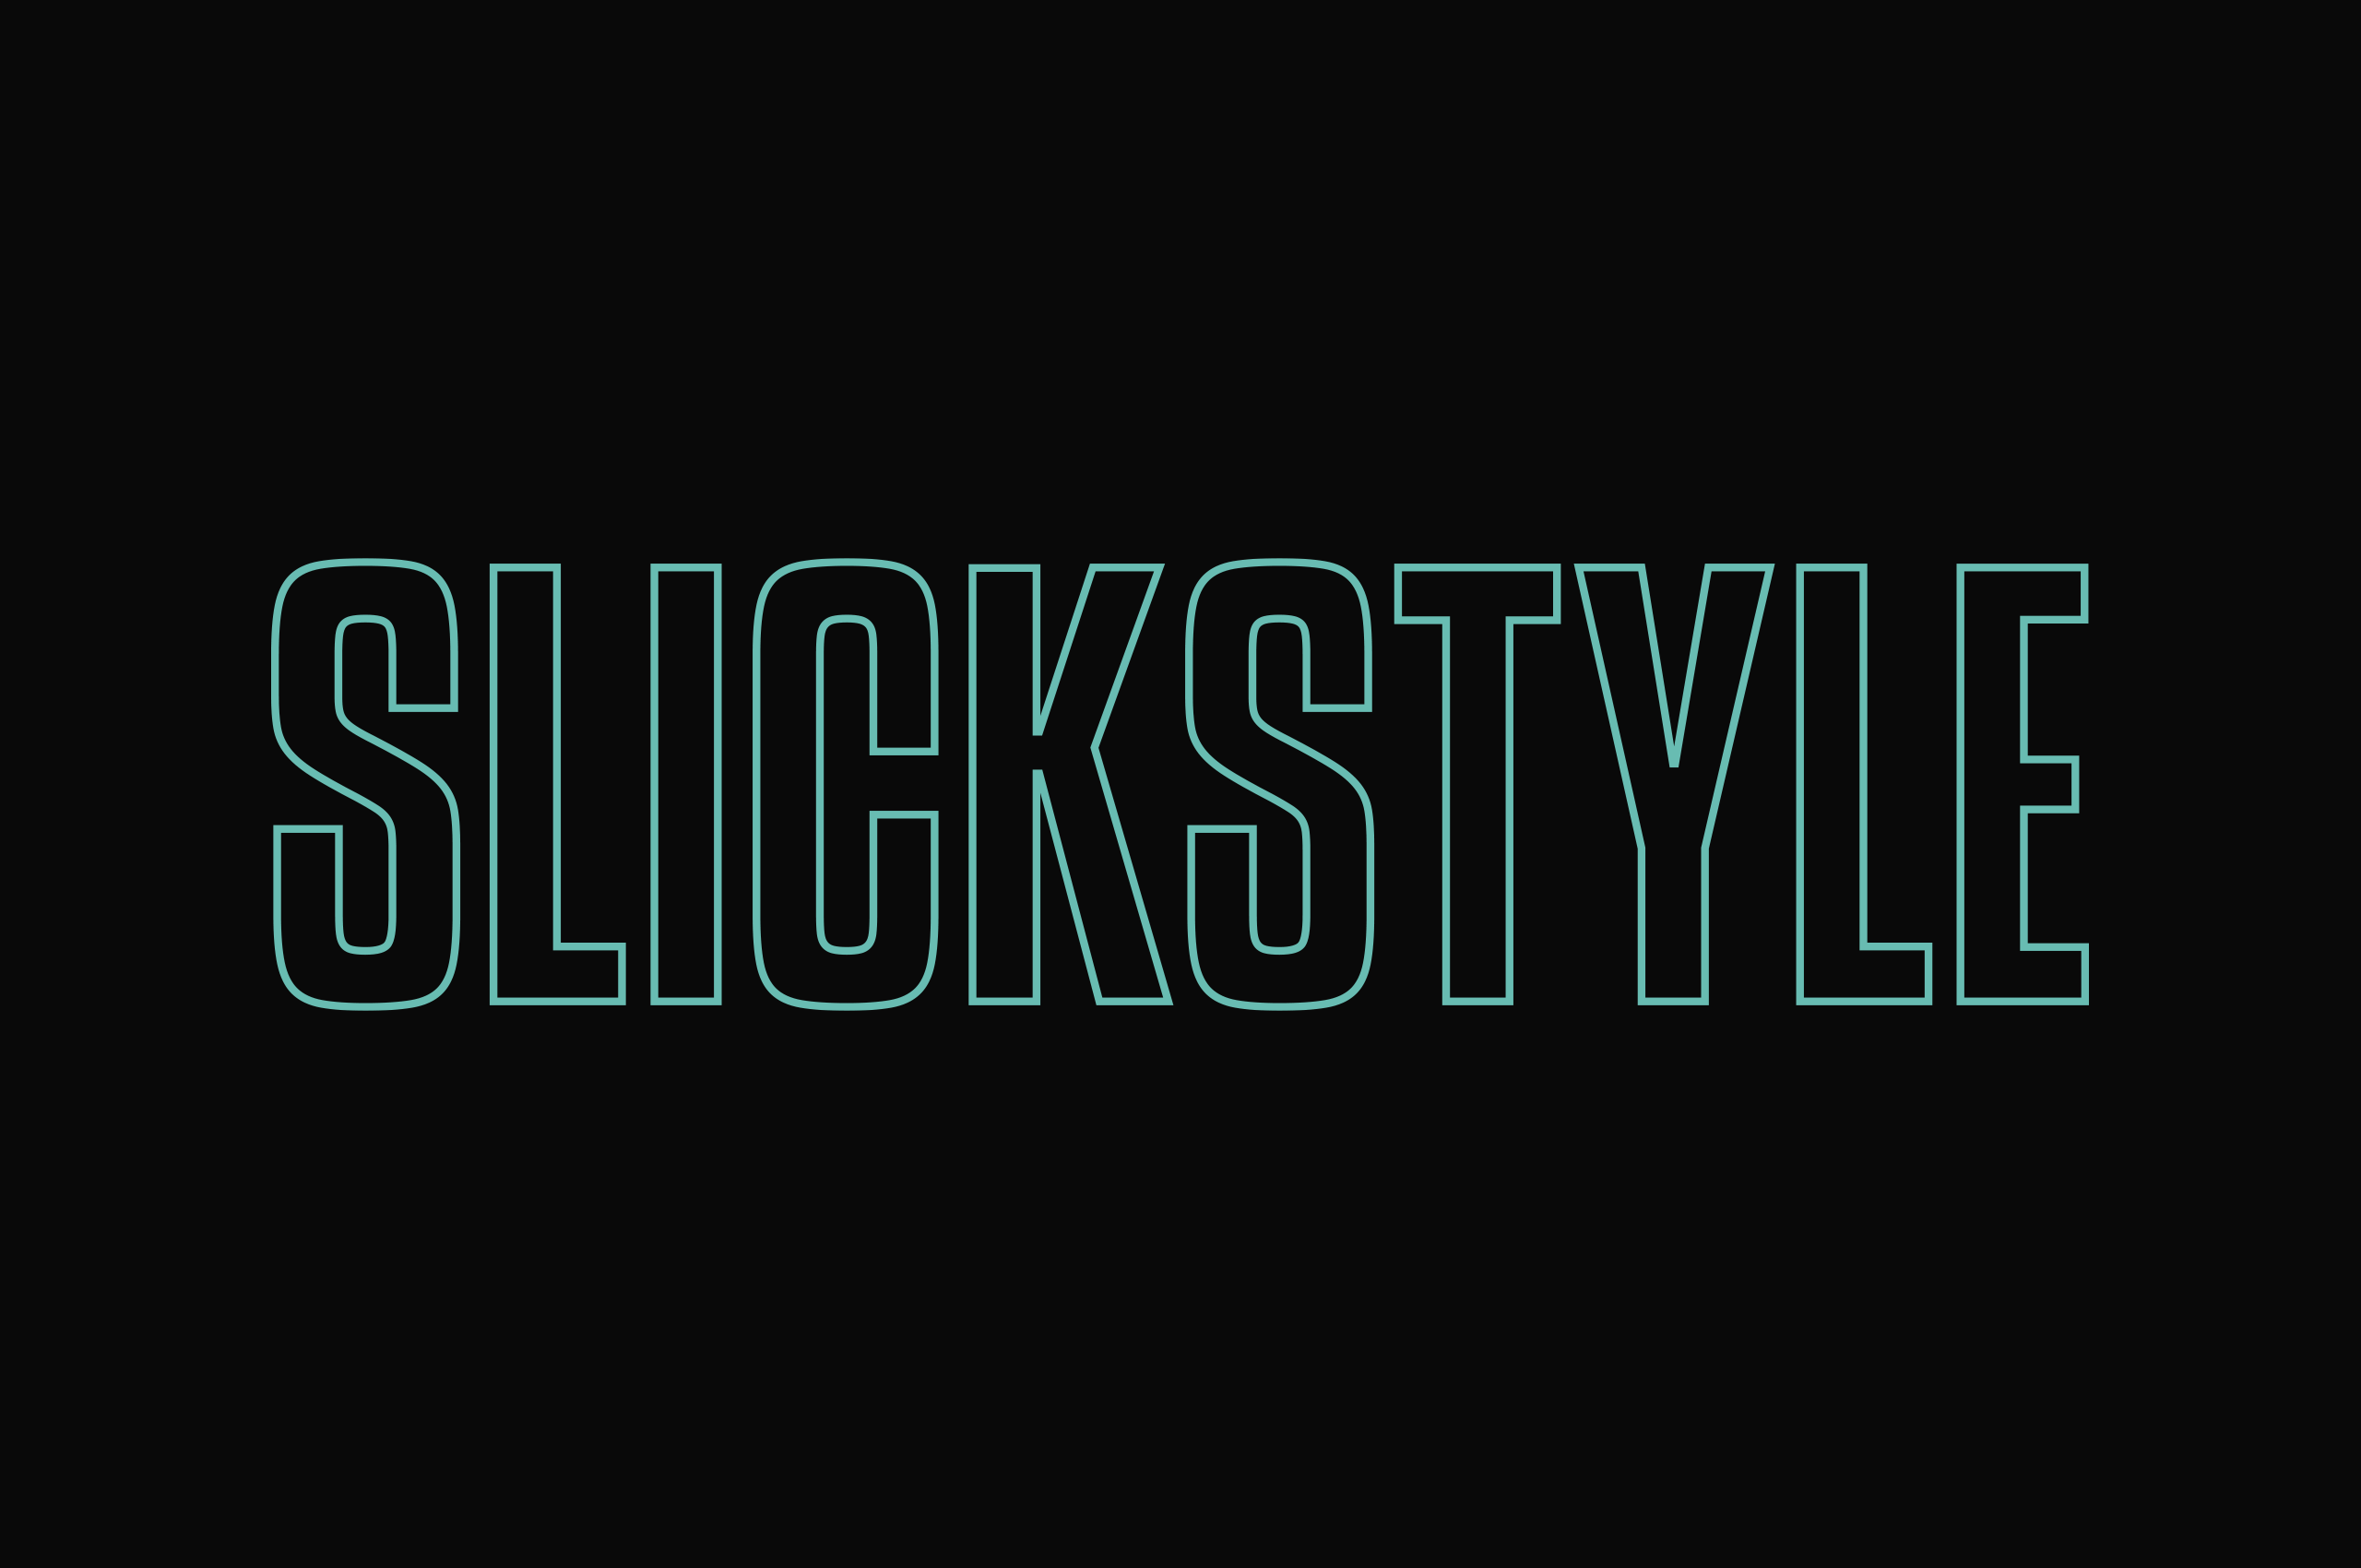 SLICKSTYLE-11a